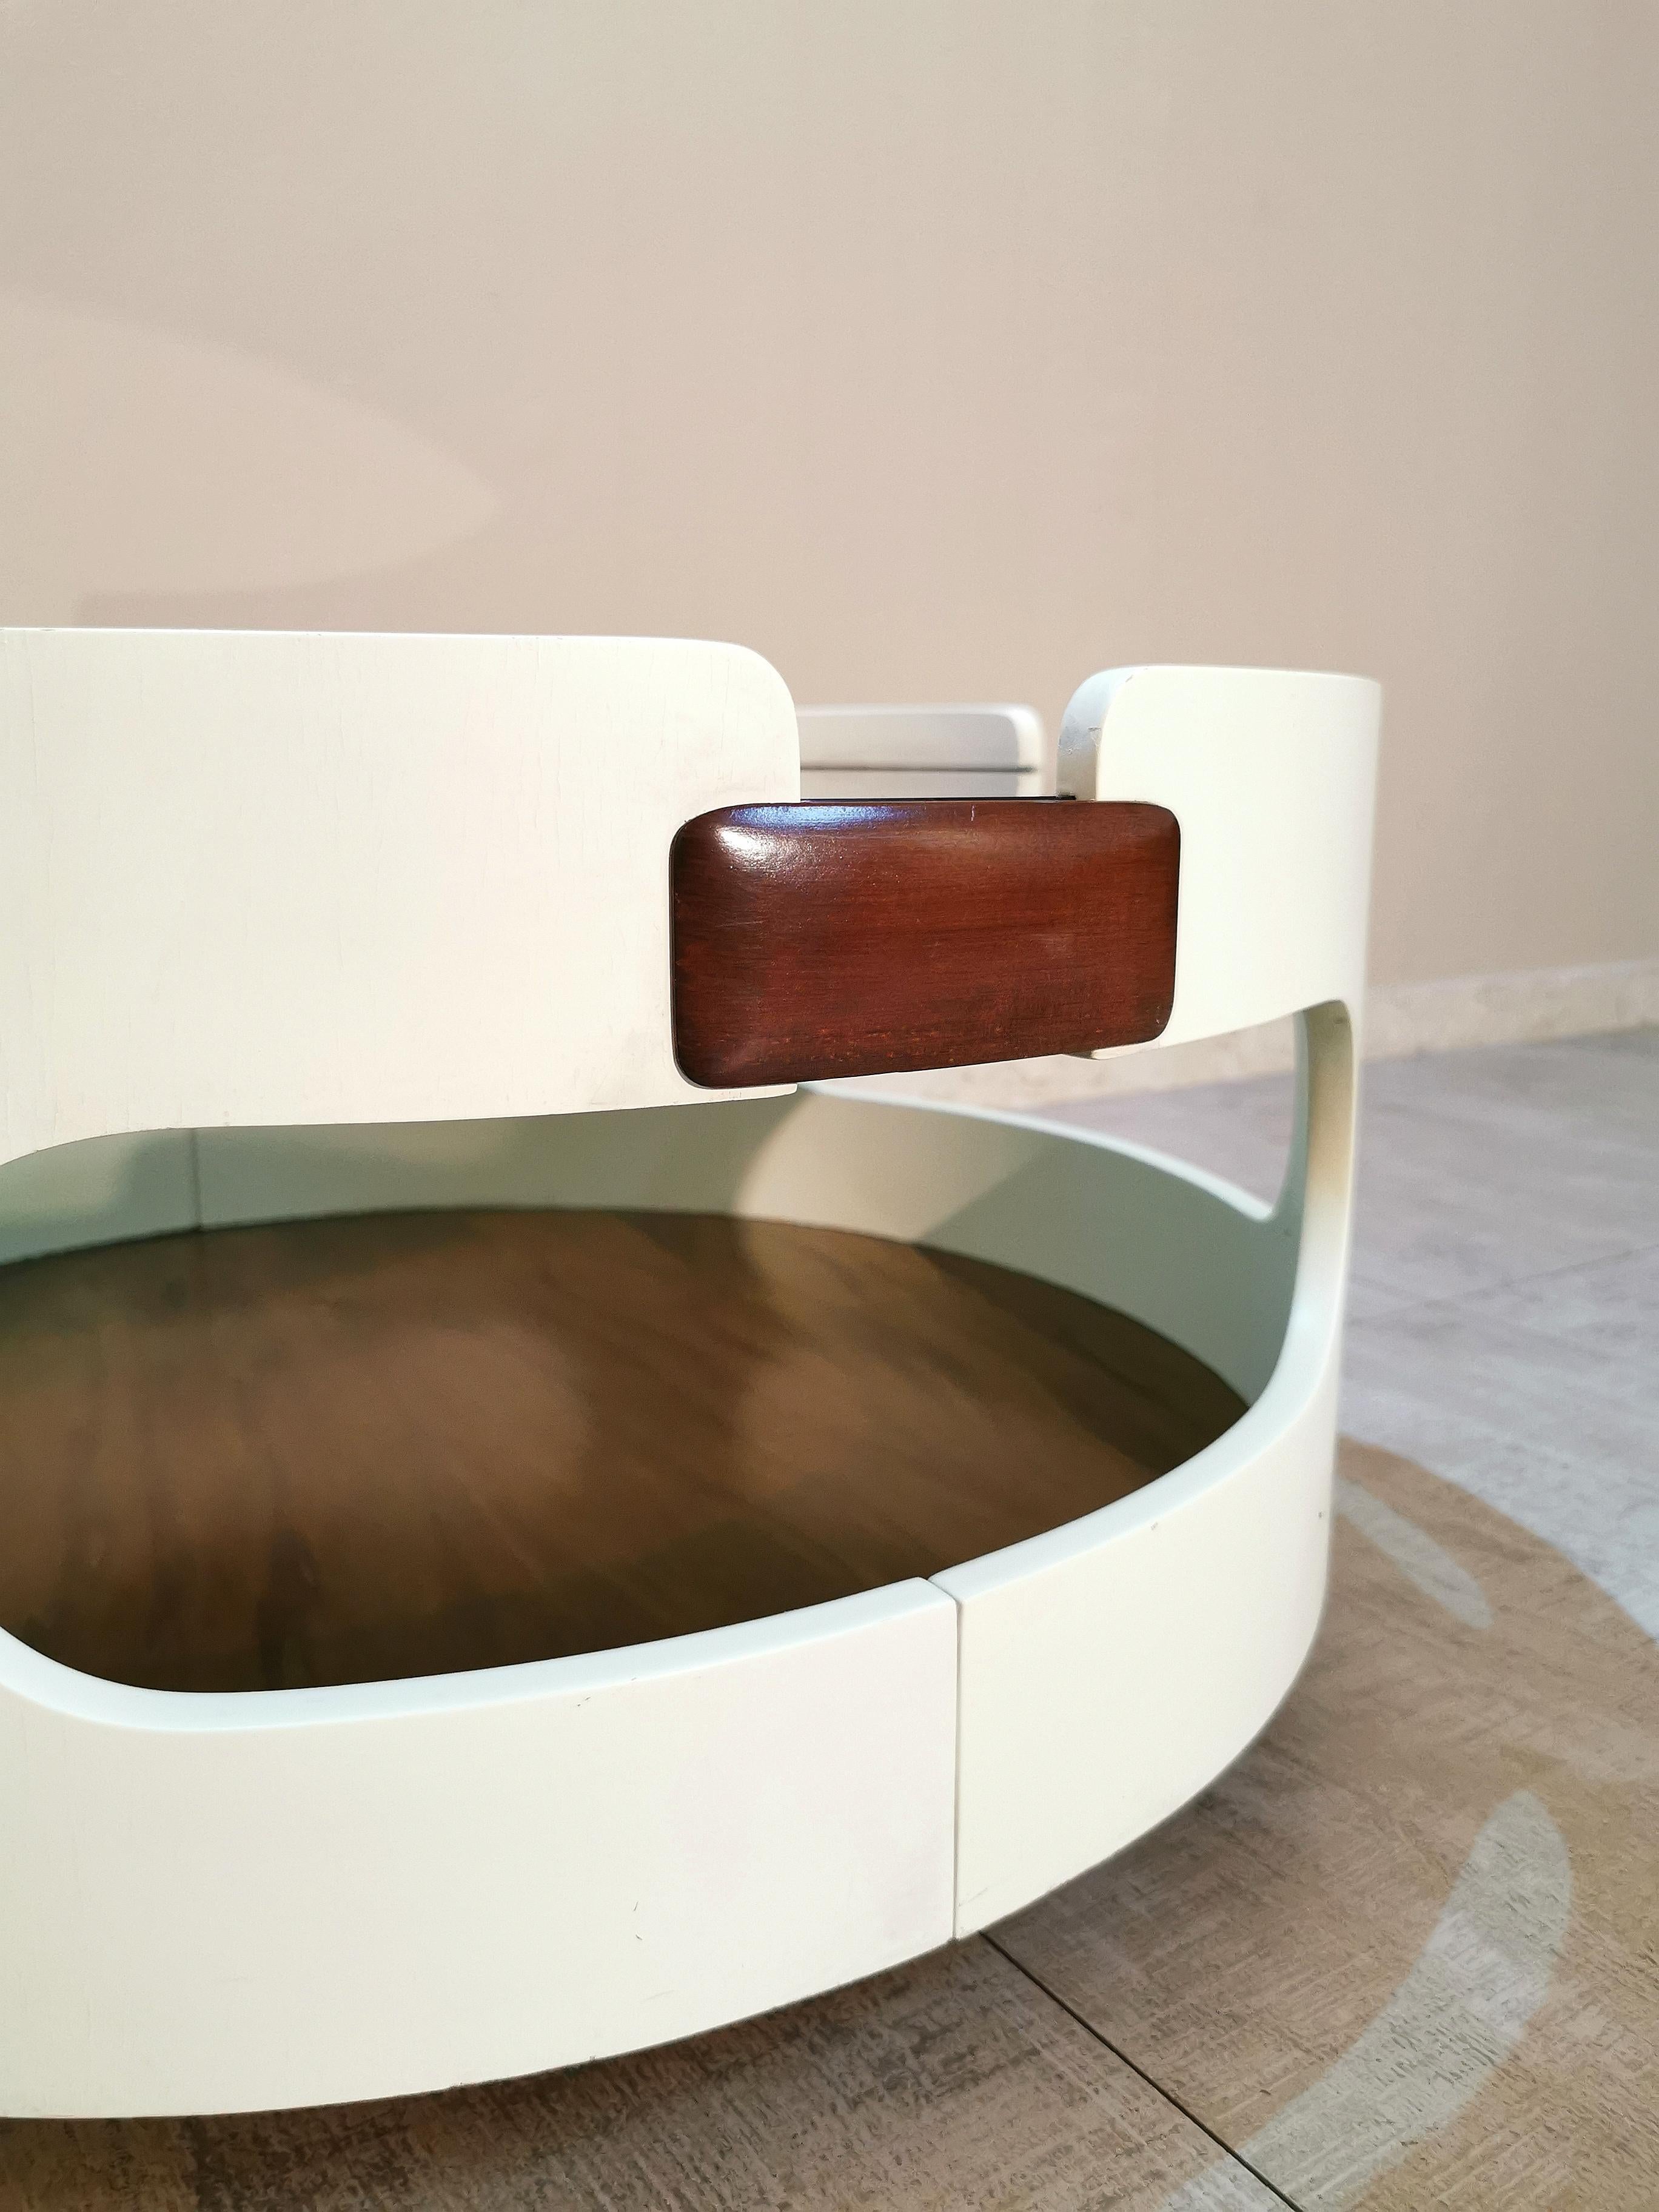 Late 20th Century Coffee Sofa Table Smoked Glass Enameled White Brown Wood Italian Design 1970s